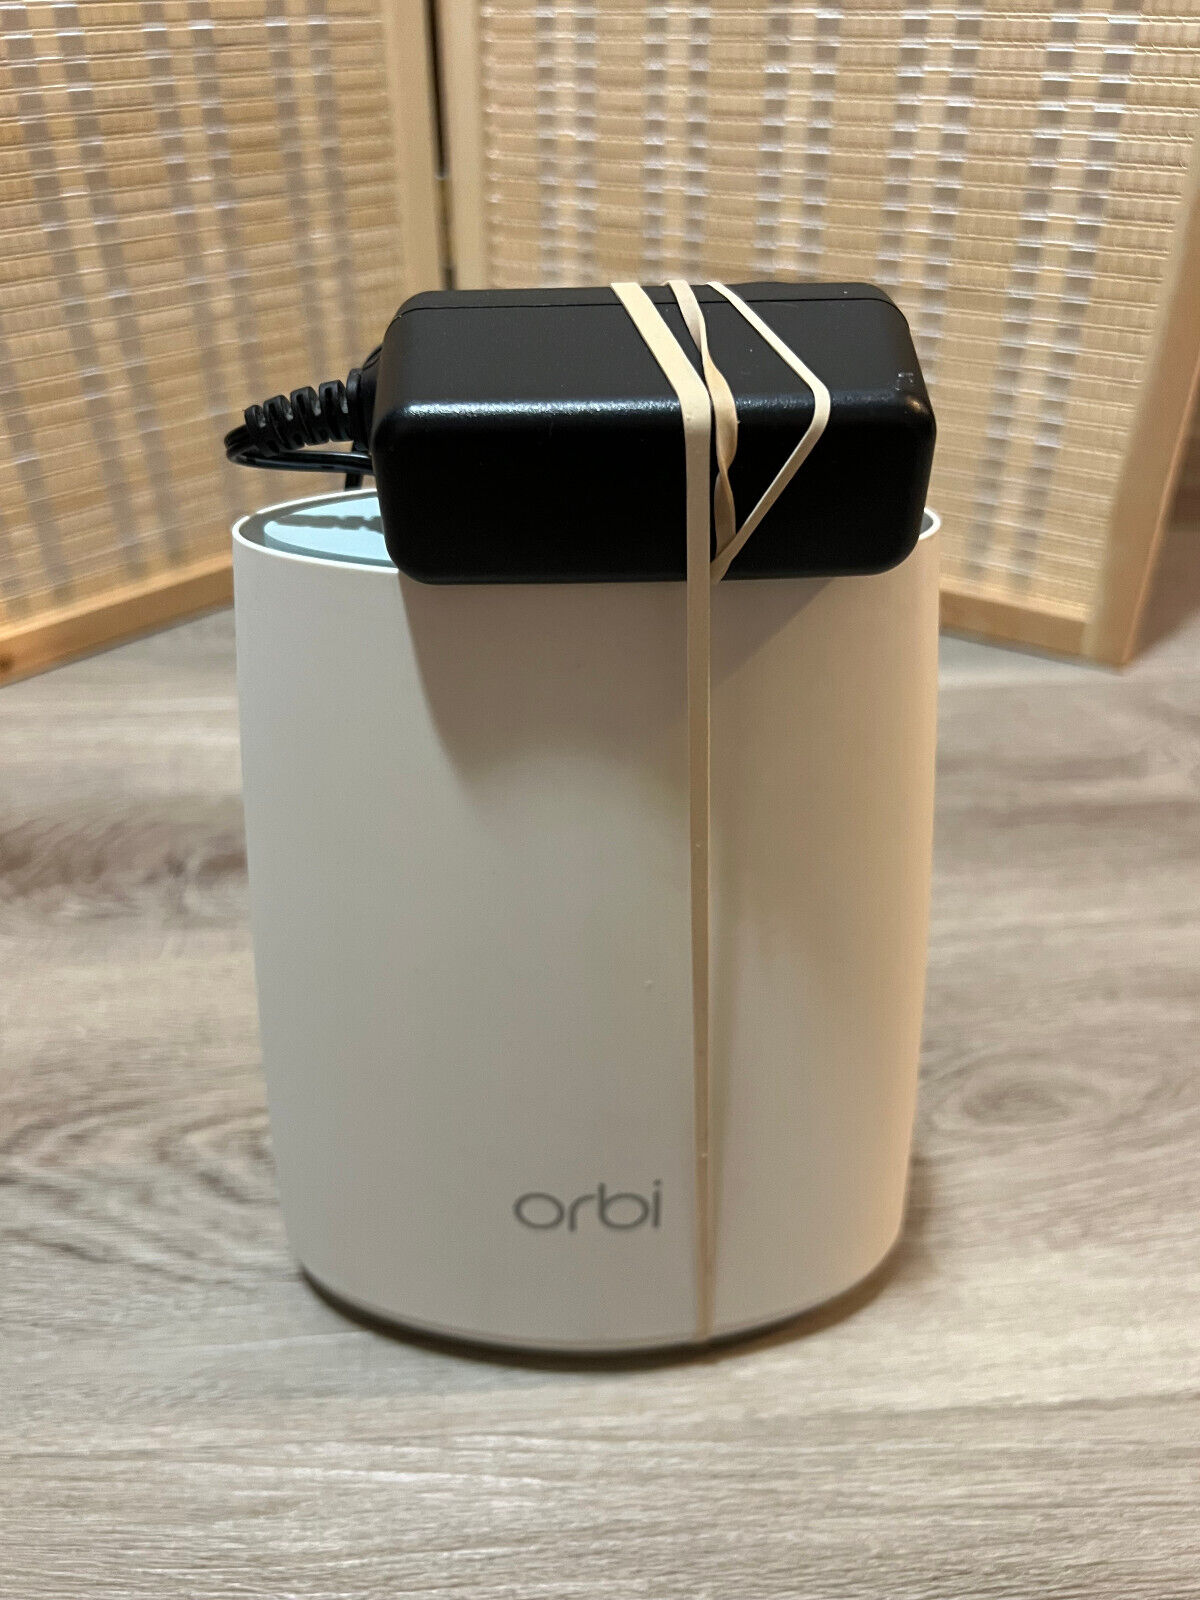 Netgear Orbi RBR40 Mini Wireless Router Bundled With Power Adapter